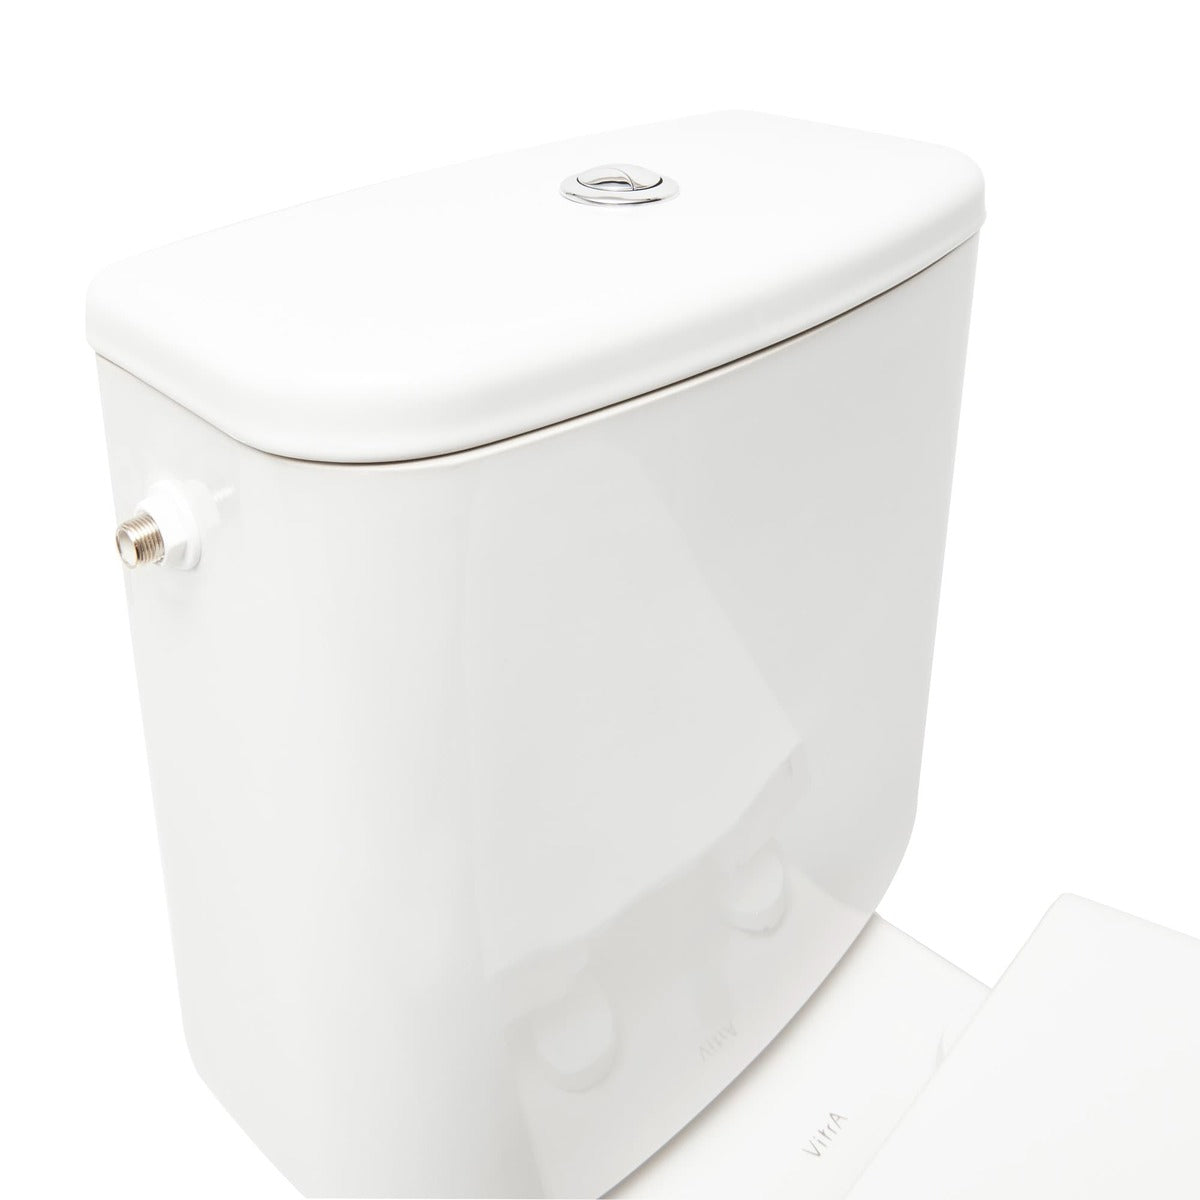 WC školjke 9780-003-7210 Vitra Normus talna WC školjka monoblok z WC desko s počasnim zapiranjem | KOPALNICA-ONLINE.SI